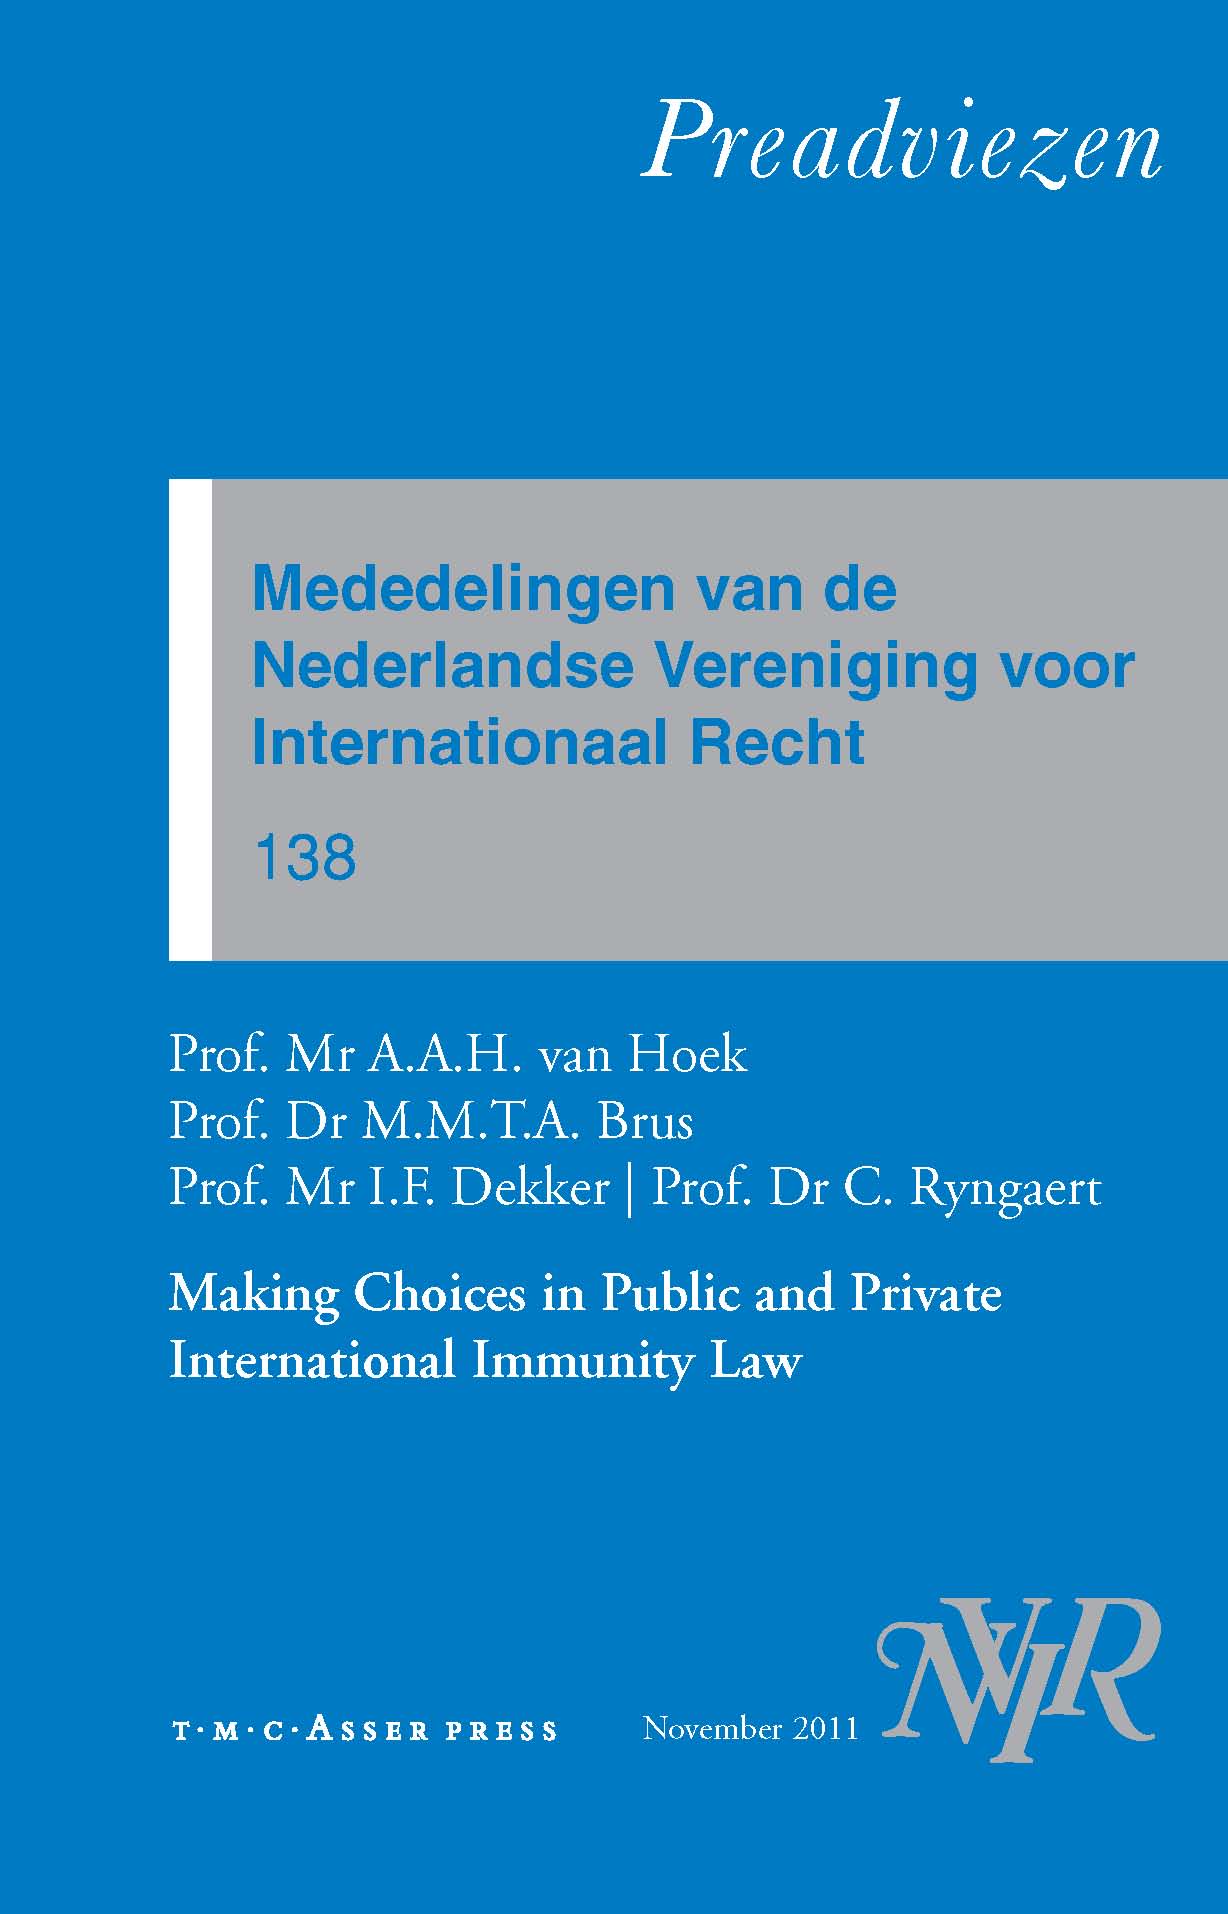 Mededelingen van de Nederlandse Vereniging voor Internationaal Recht – Nr. 138 – Making Choices in Public and Private International Immunity Law